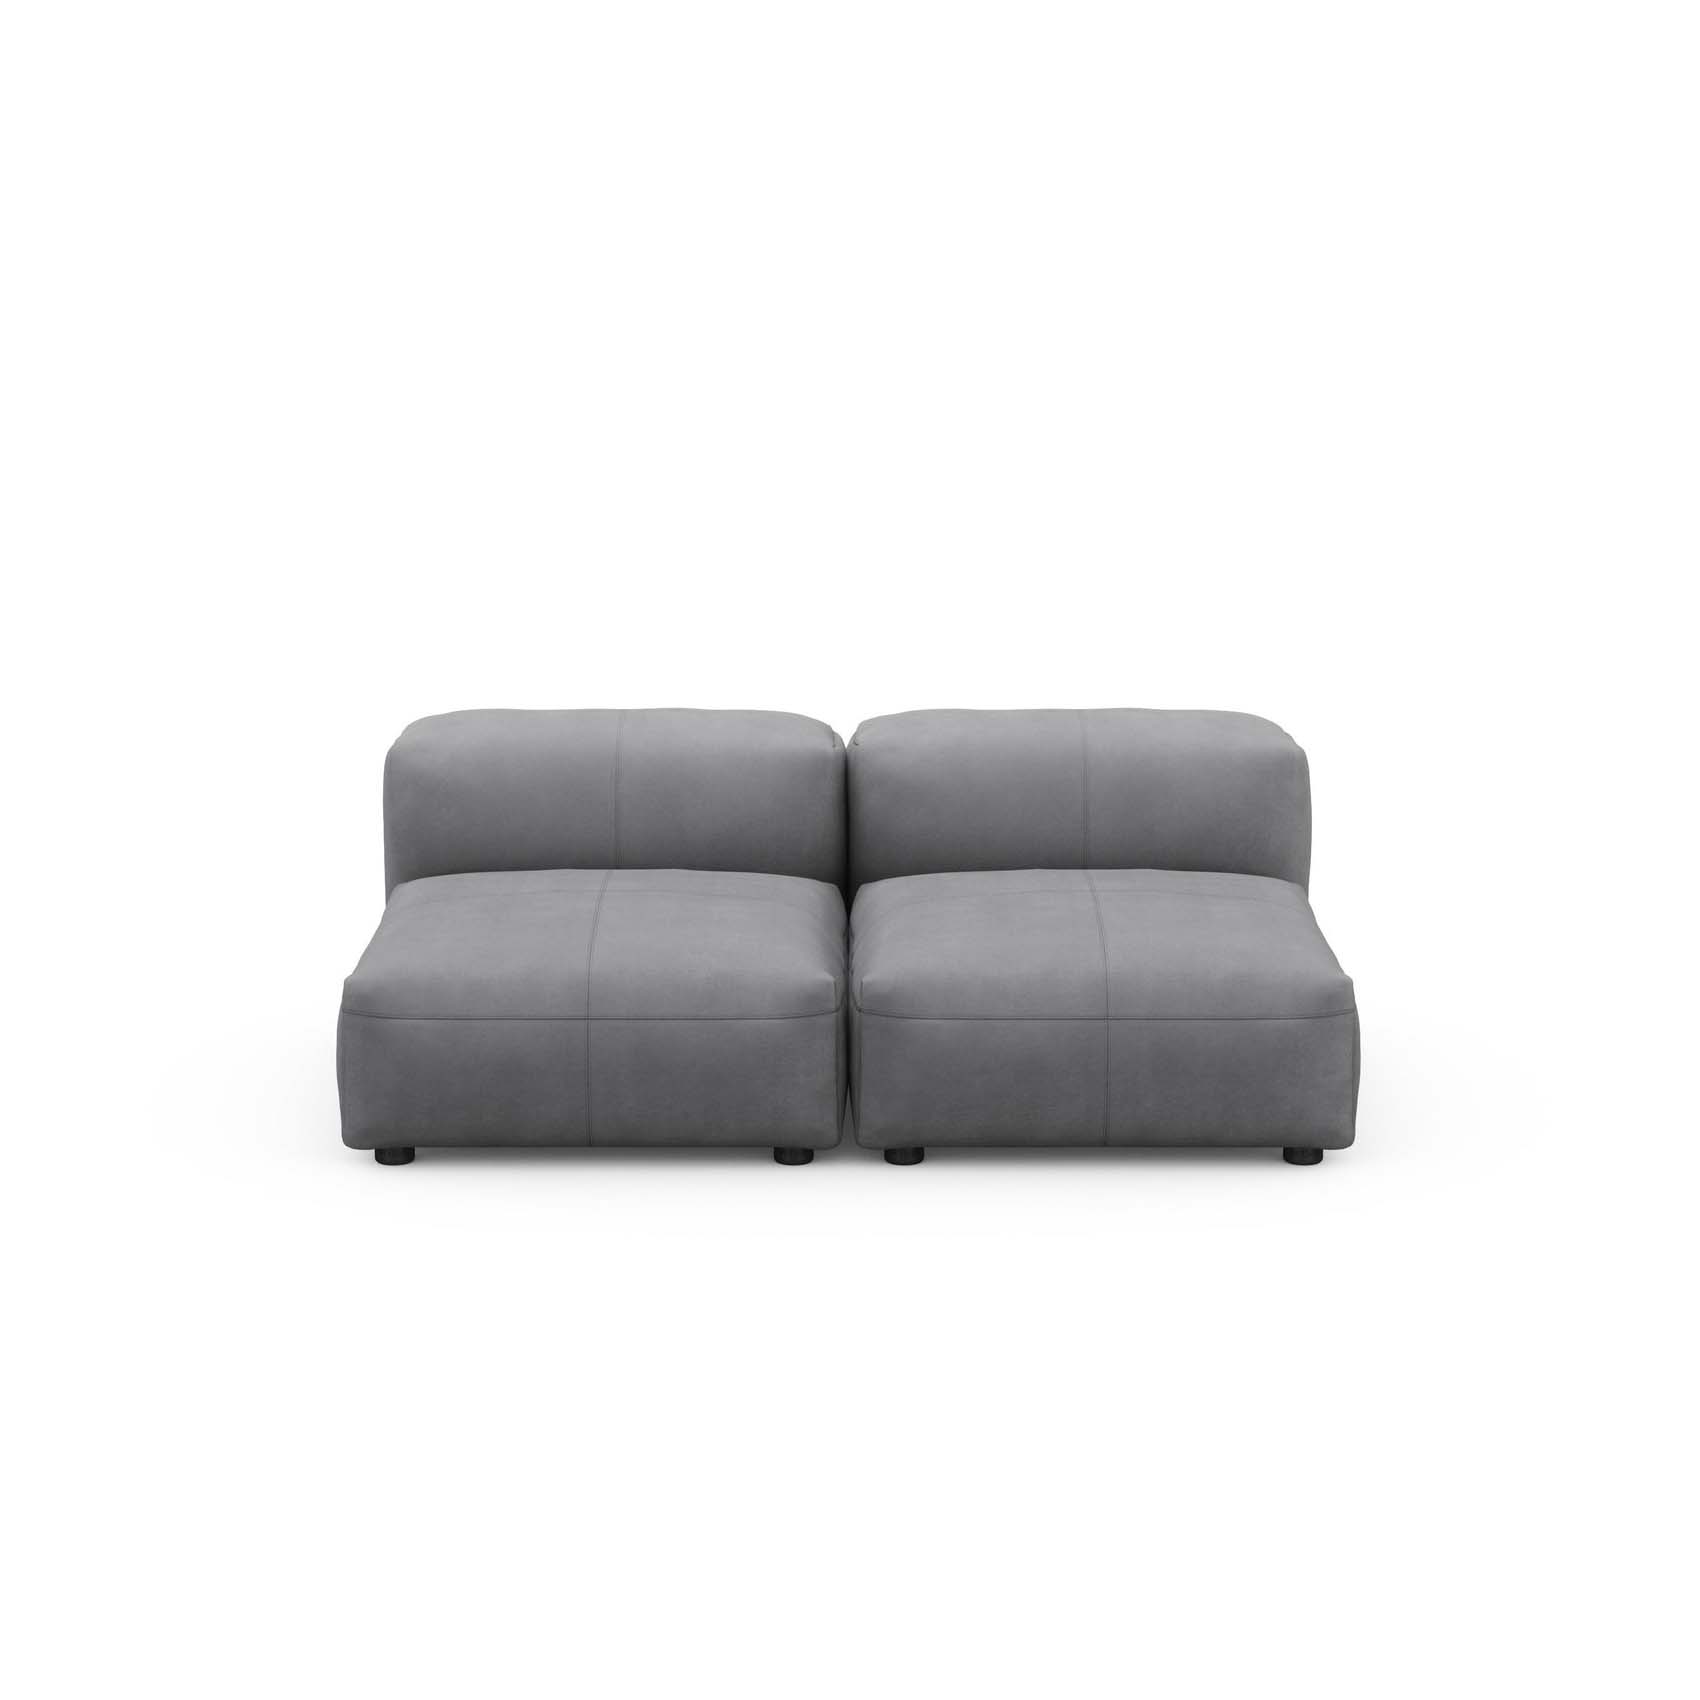 Two Seat Lounge Sofa S Leather Dark Grey